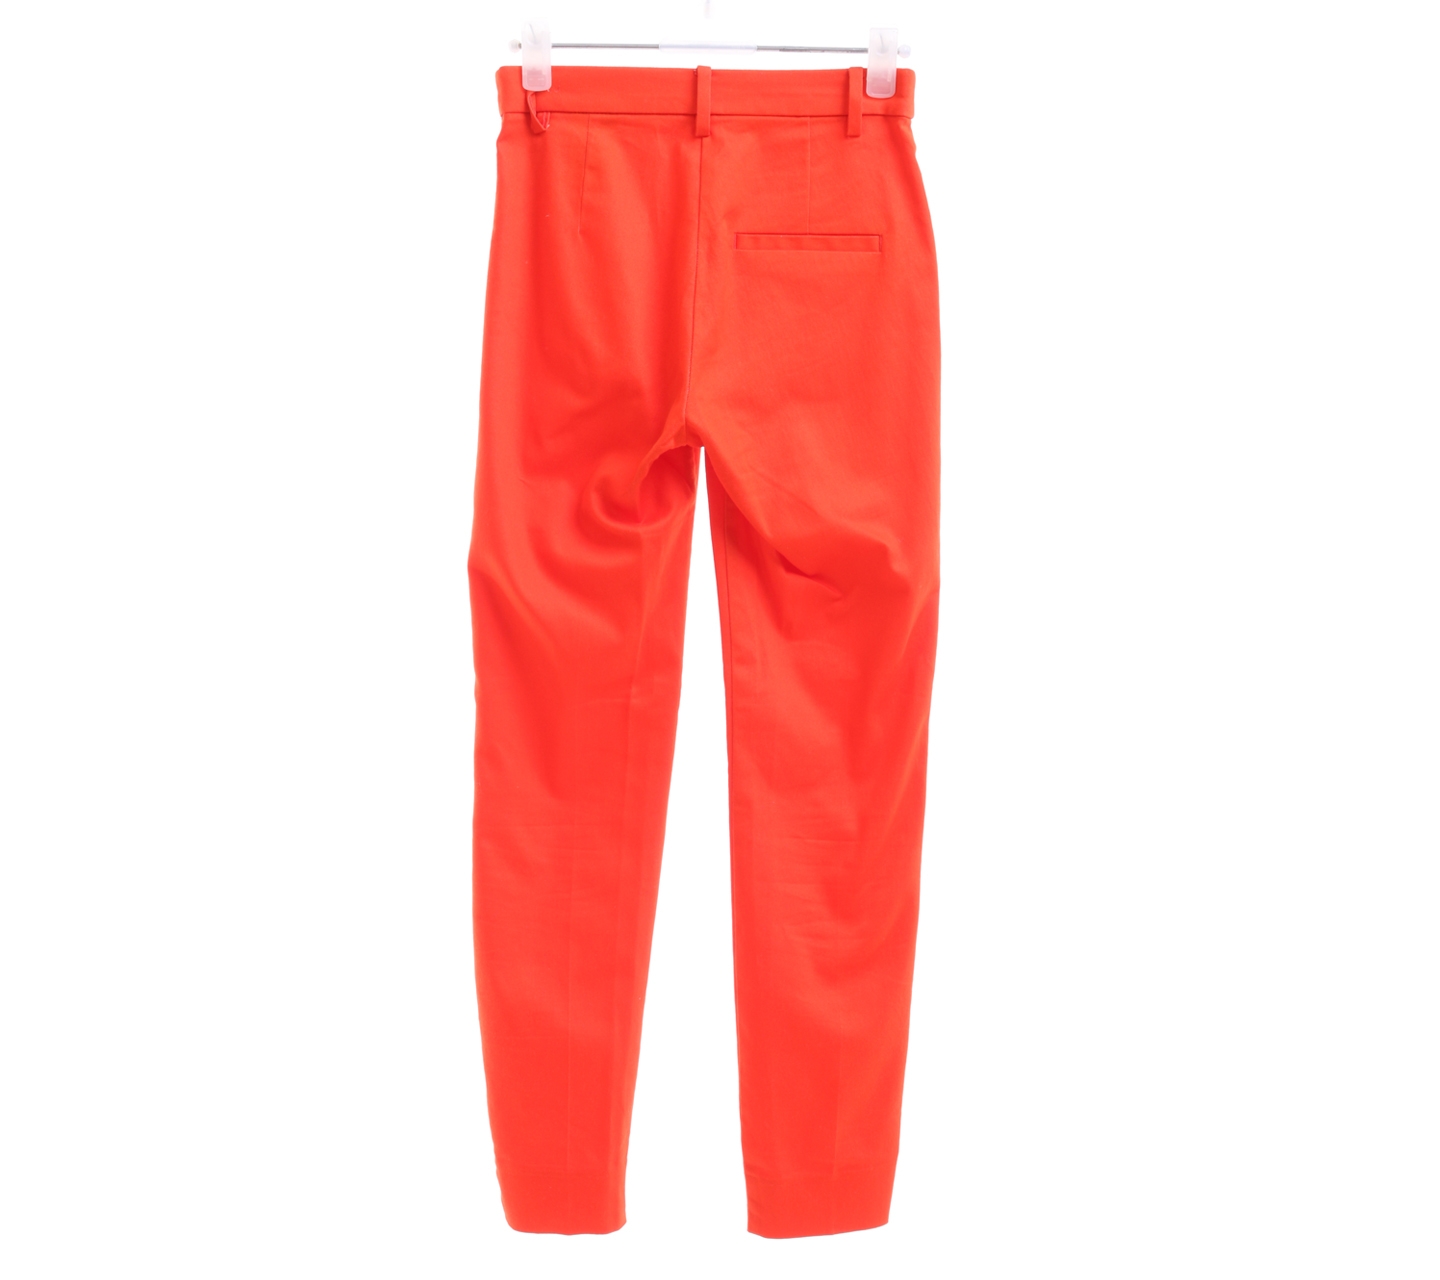 H&M Orange Skinny Long Pants	